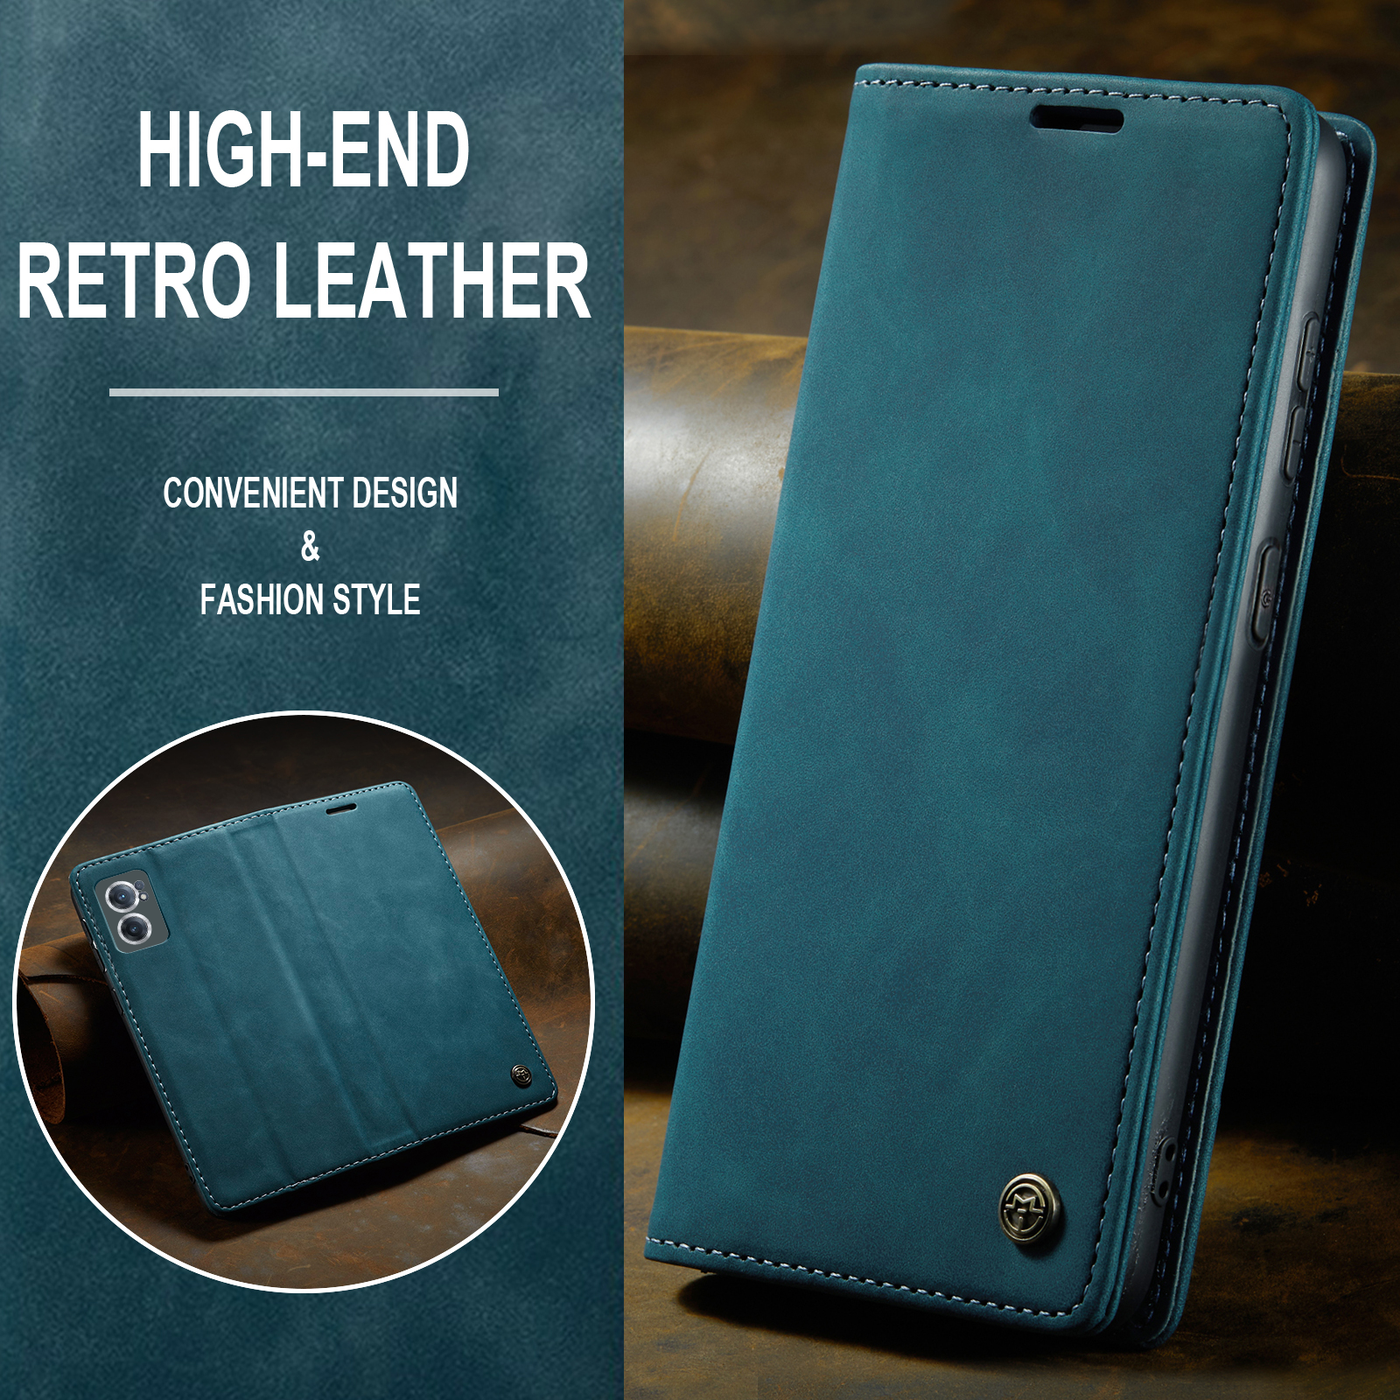 Oneplus Nord CE 2 high quality premium and unique designer leather case cover